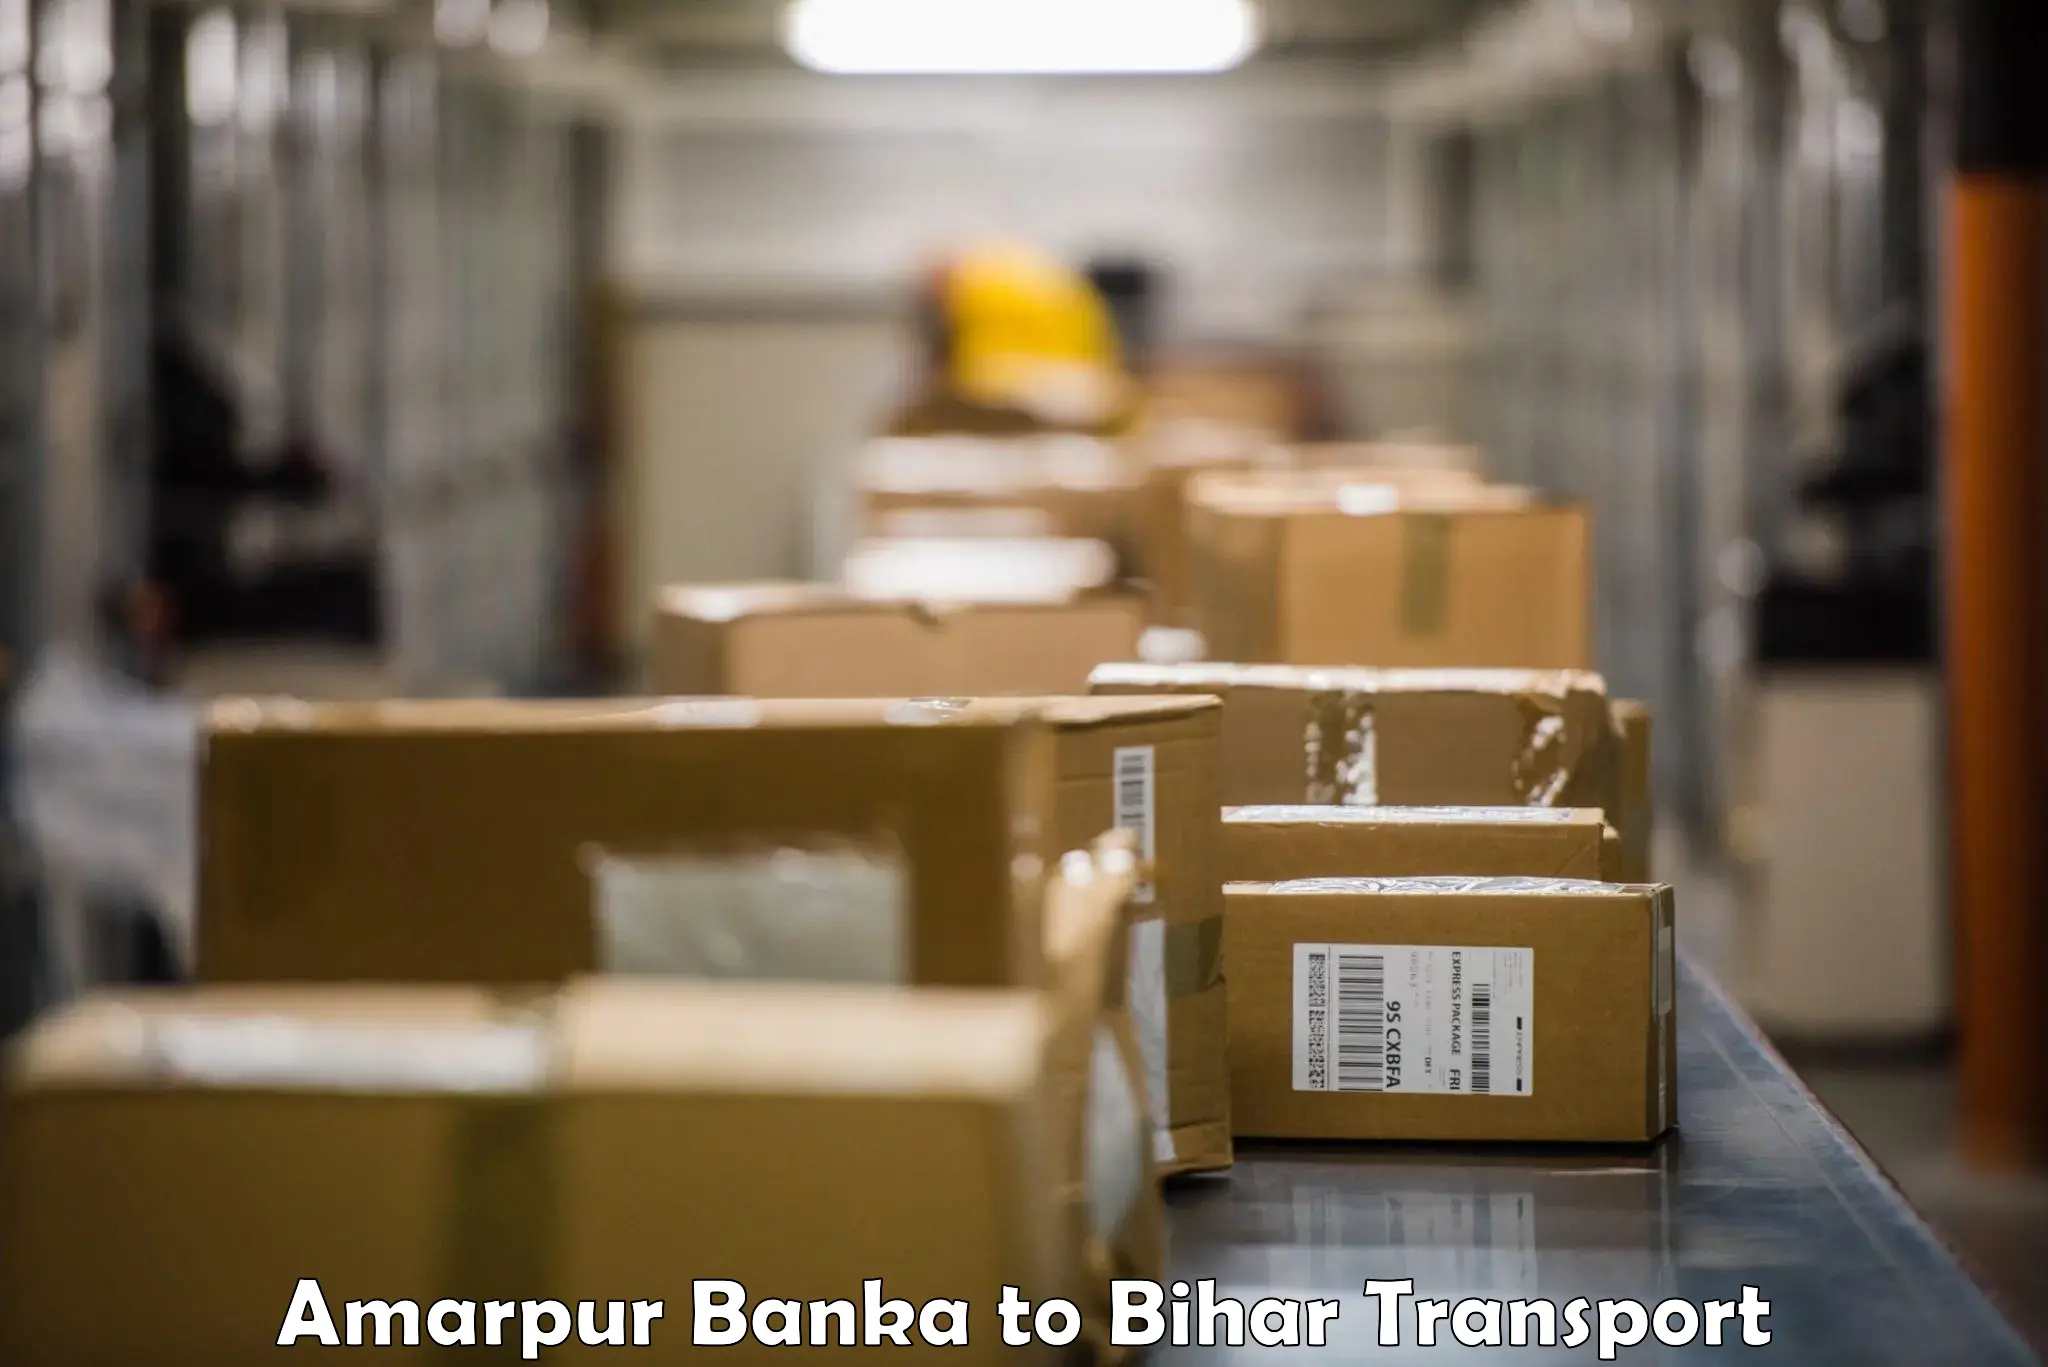 Truck transport companies in India Amarpur Banka to Saraiya